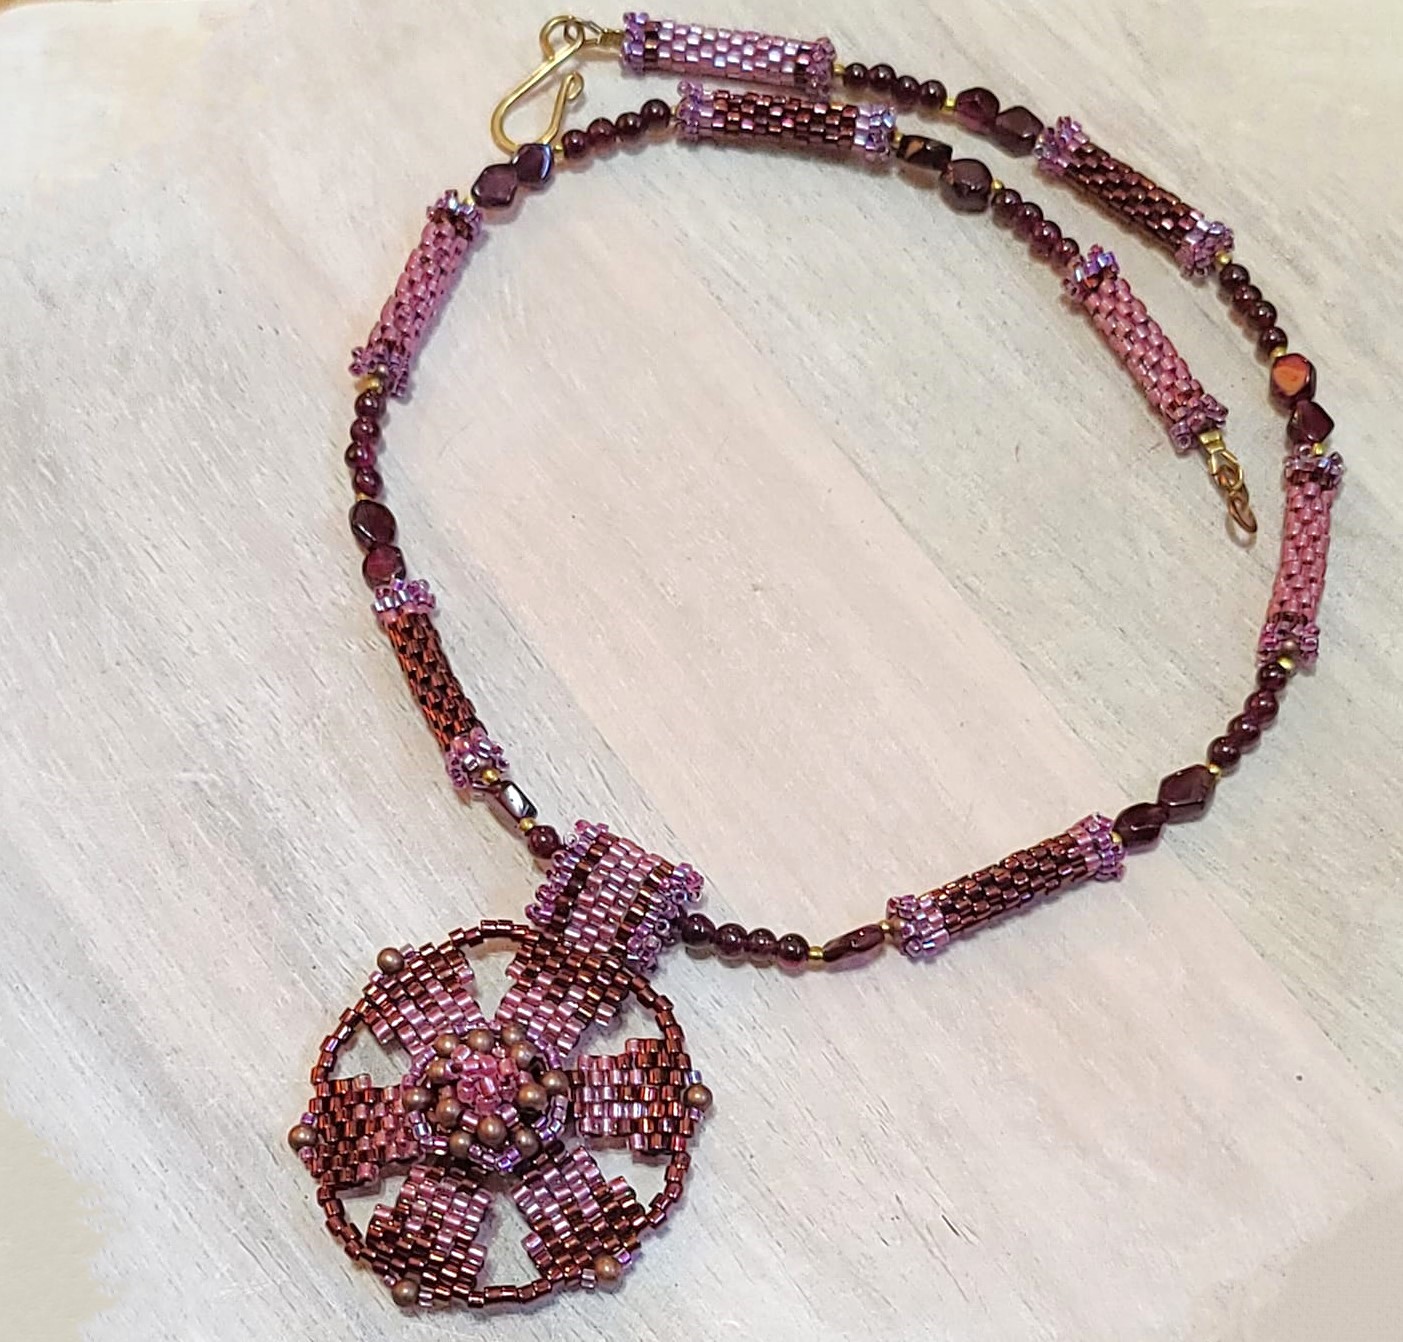 Garnet pendant necklace, center flower design with gems